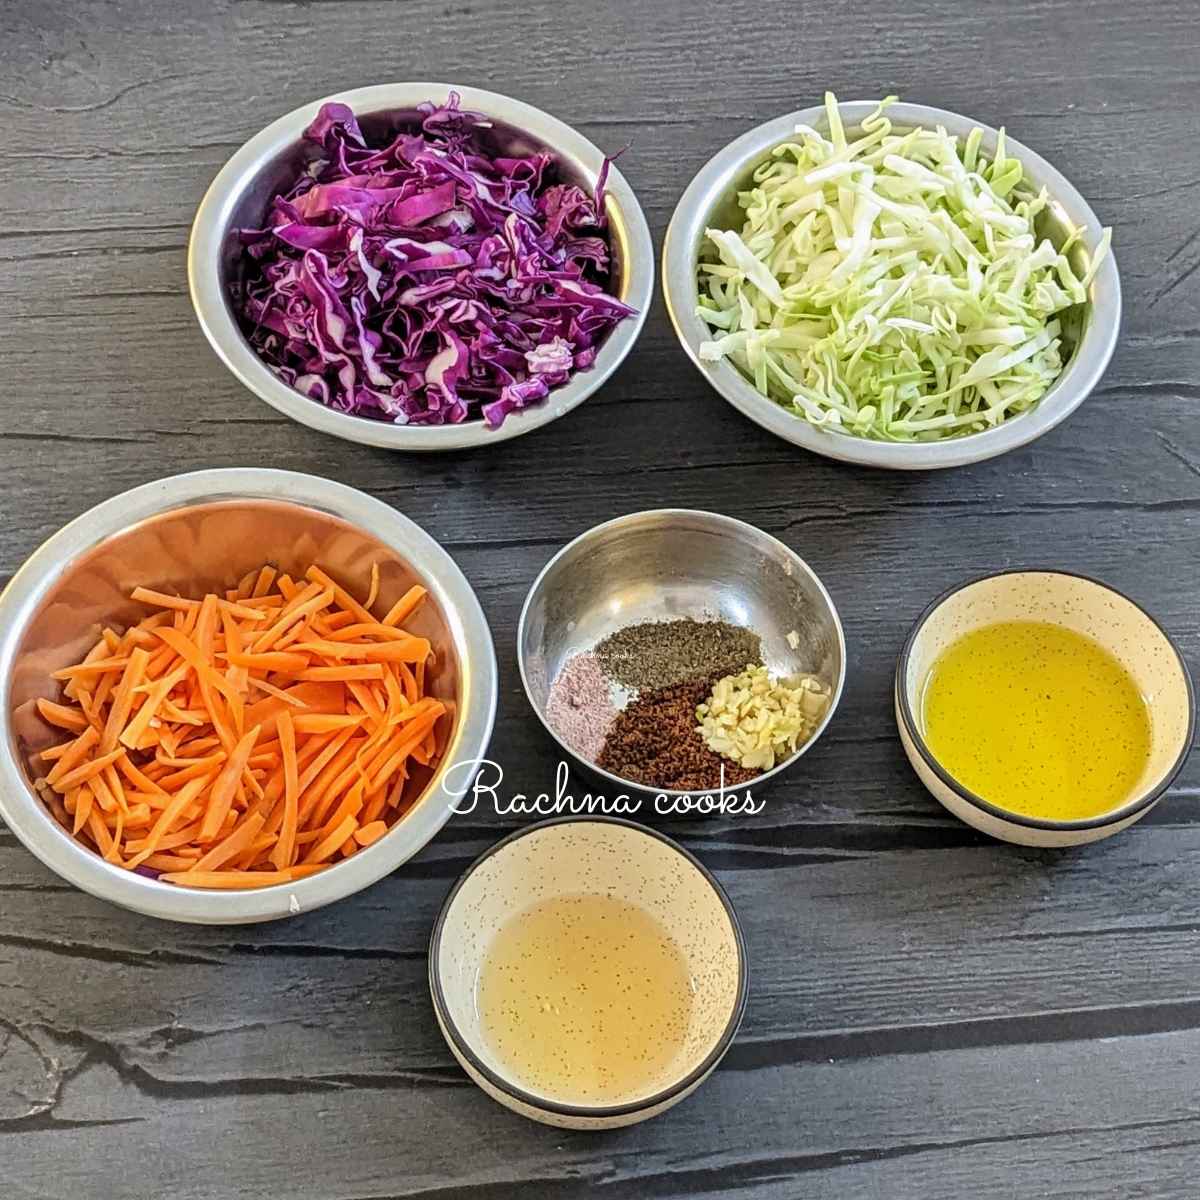 Shredded green cabbage, purple cabbage, carrots, extra virgin olive oil, apple cider vinegar, seasonings in bowls.